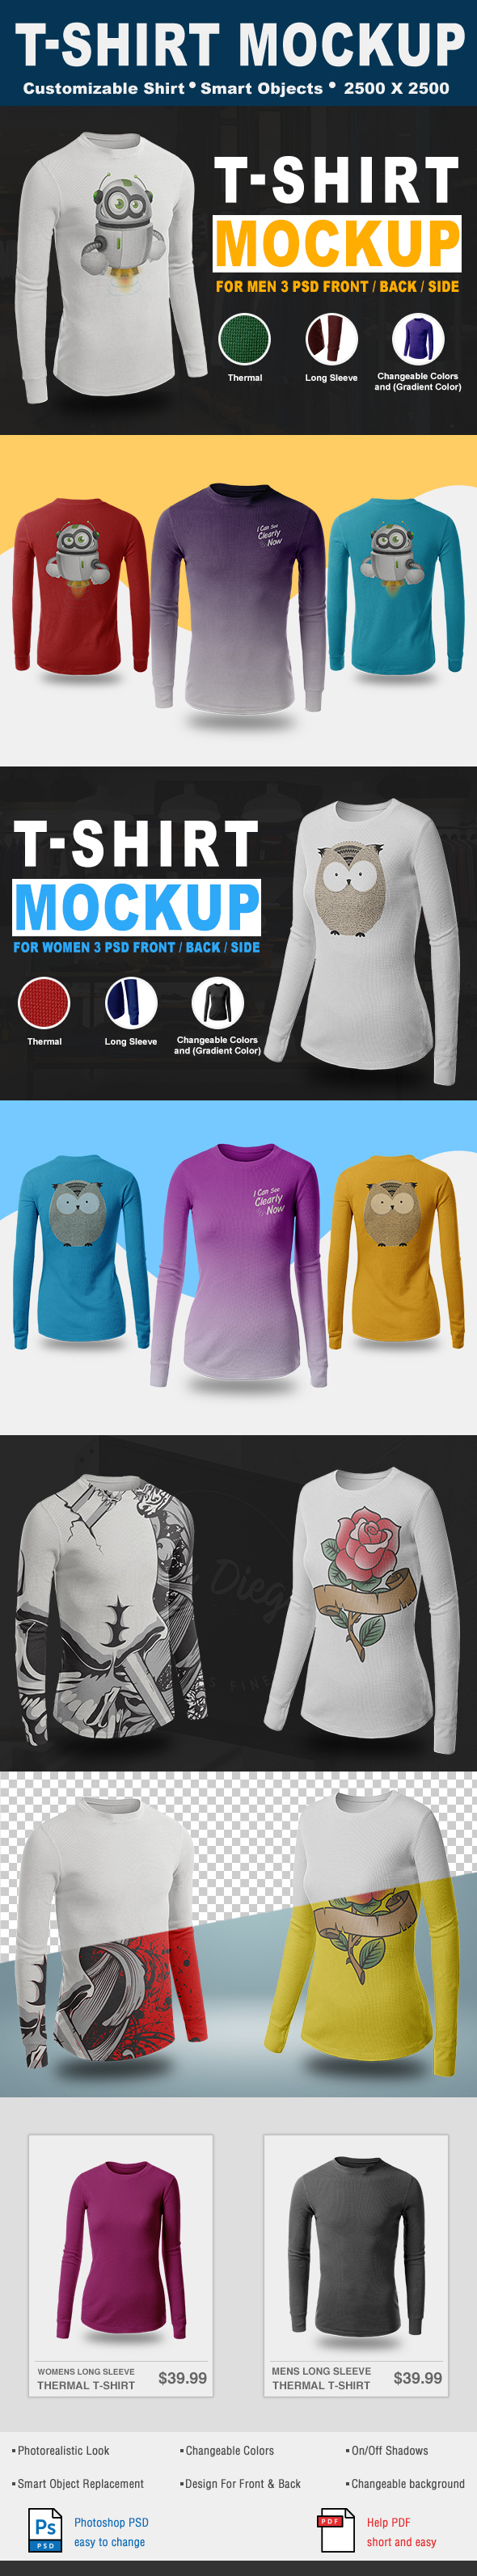 Download T Shirt Mockup Thermal Shirts Men Women By Btdesign17 On Deviantart